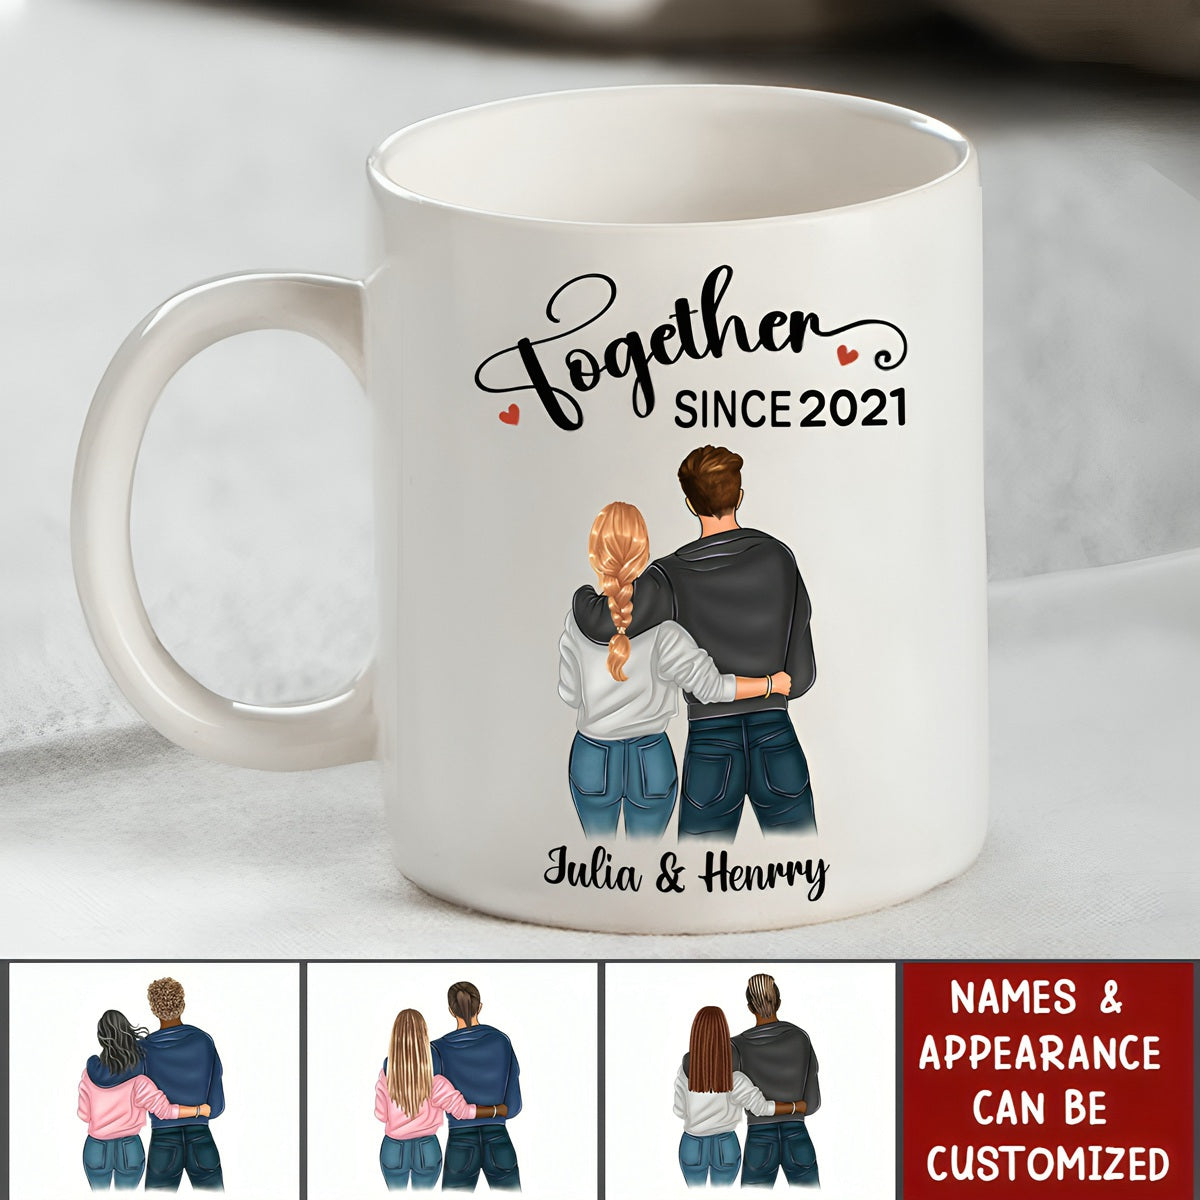 Together Since - Personalized Mug